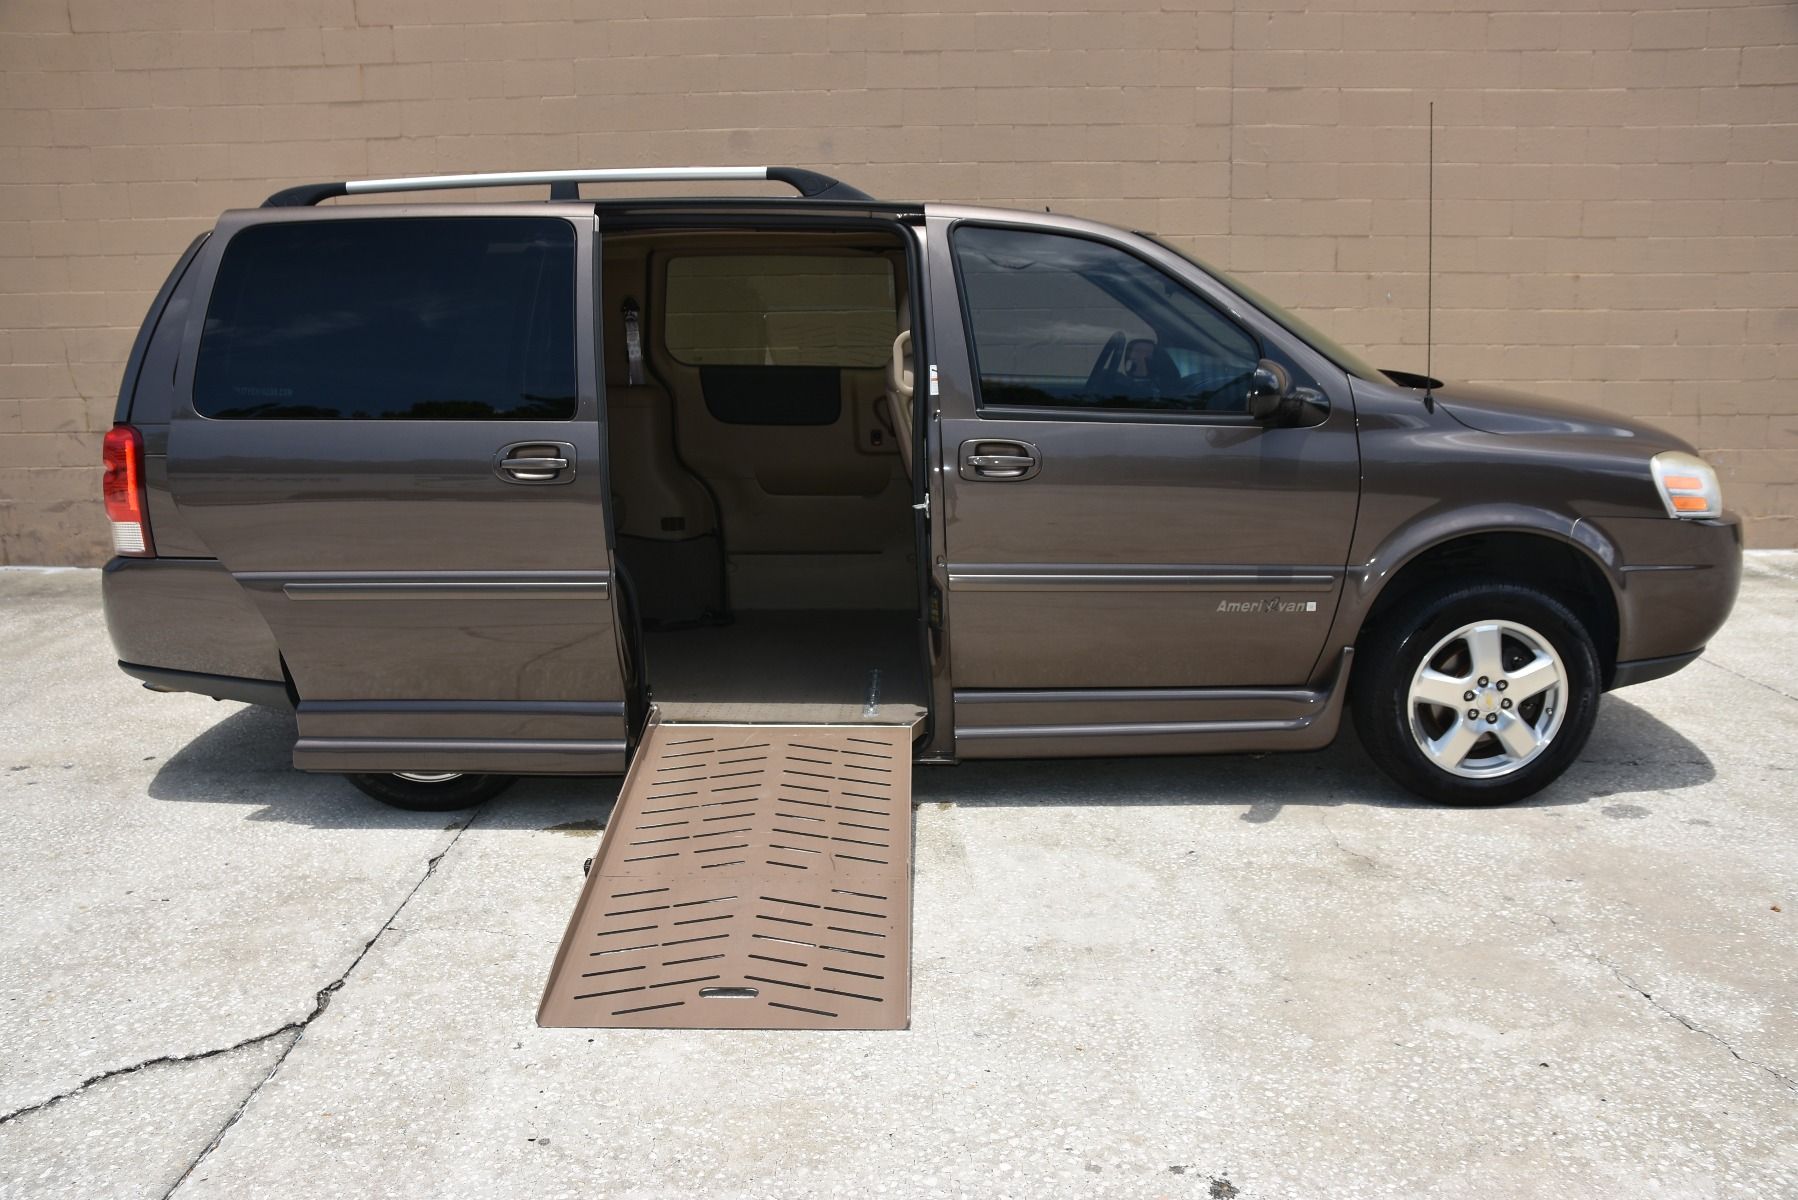 Brown Chevrolet Uplander Wheelchair Van with ramp deployed from passenger side sliding doorway.